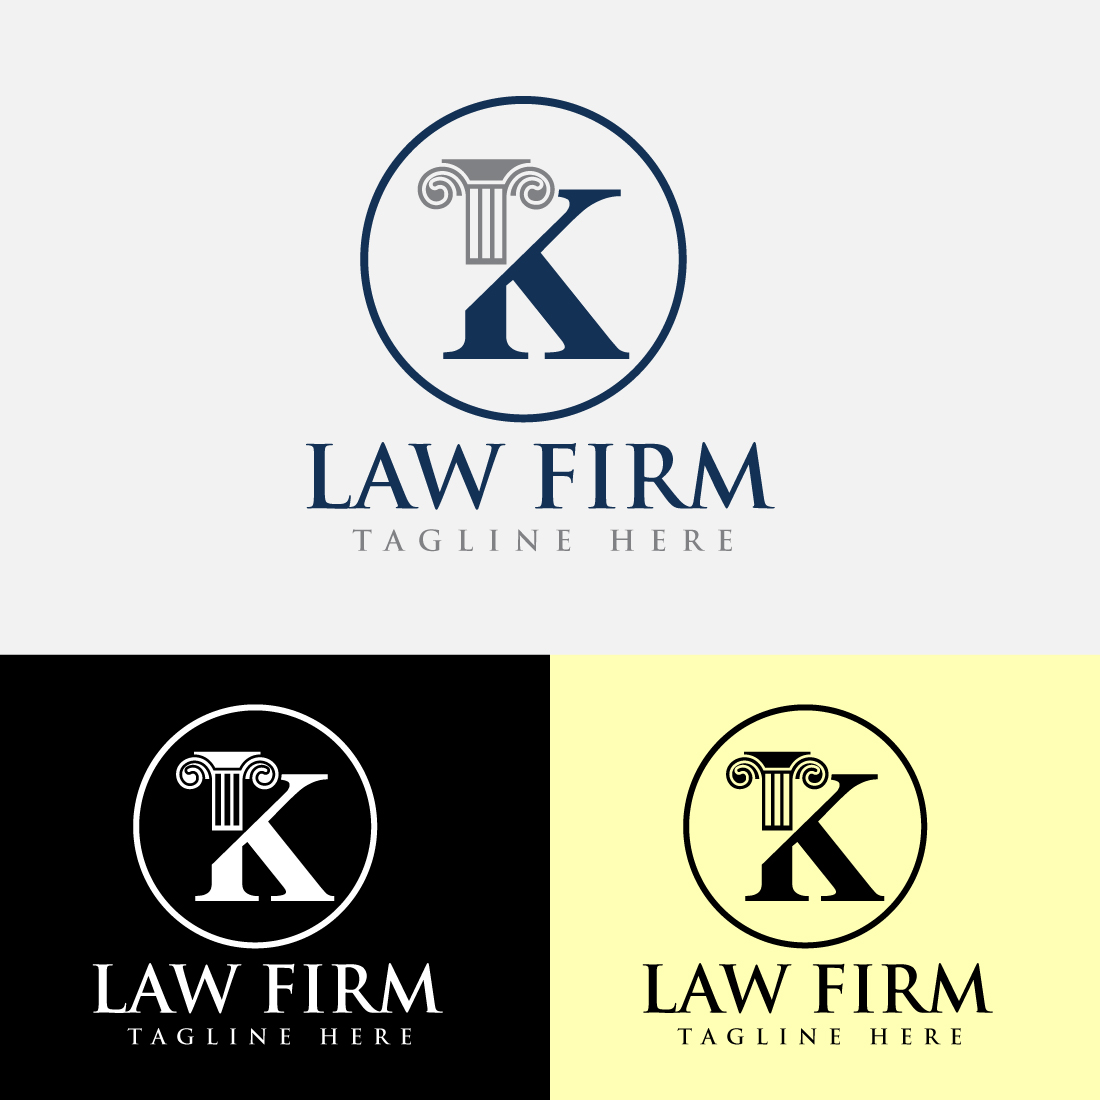 Initial Letter K Logo Design Template cover image.